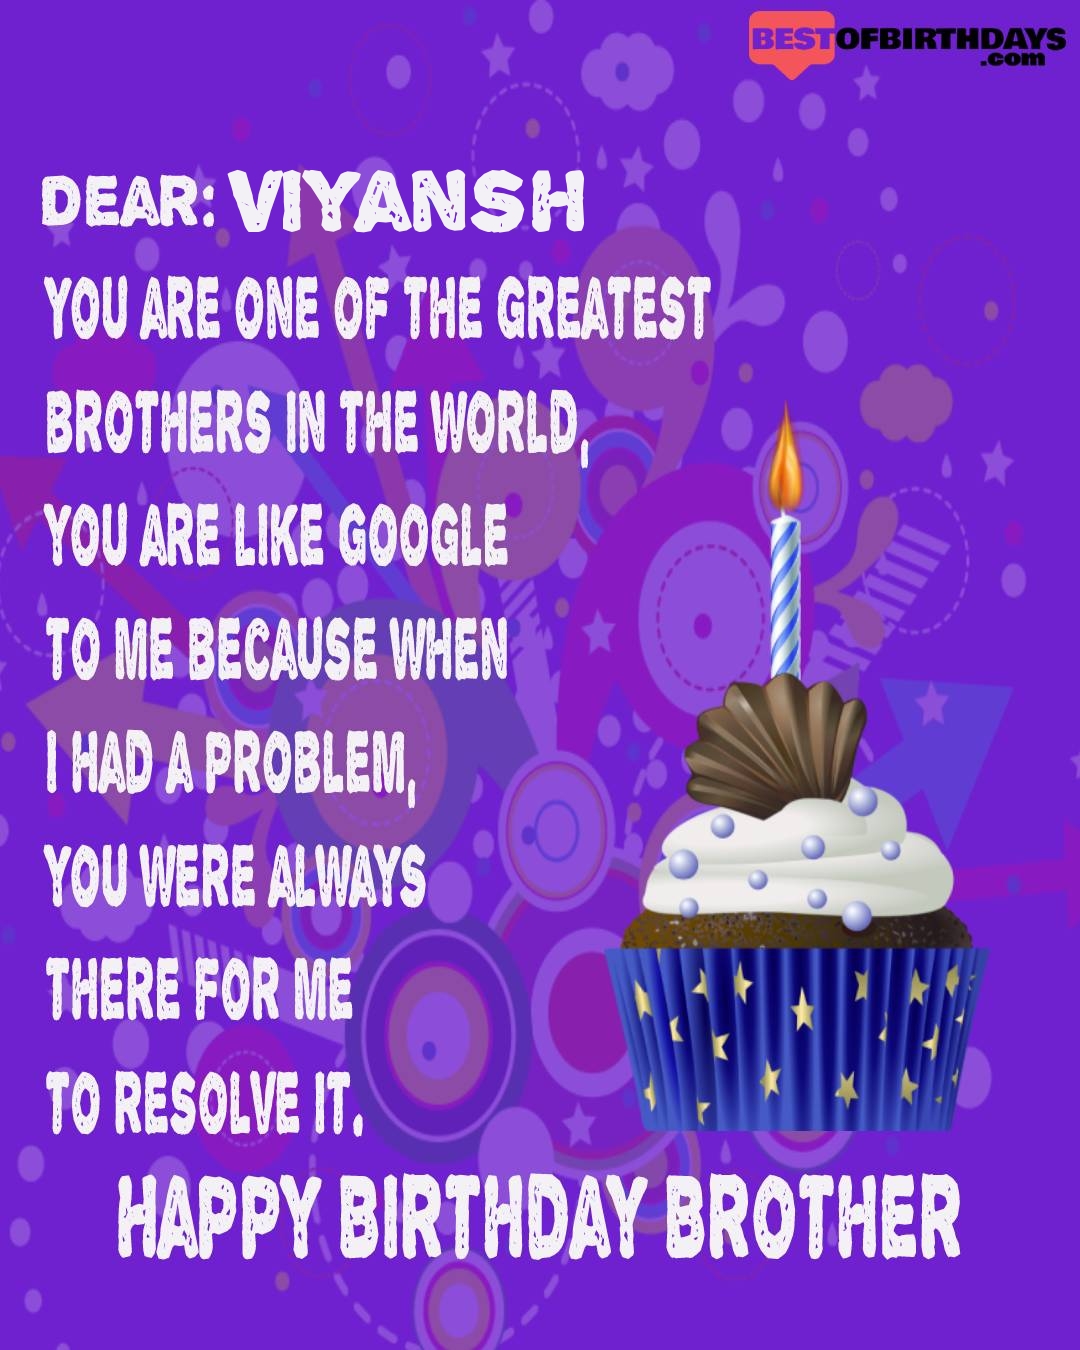 Happy birthday viyansh bhai brother bro